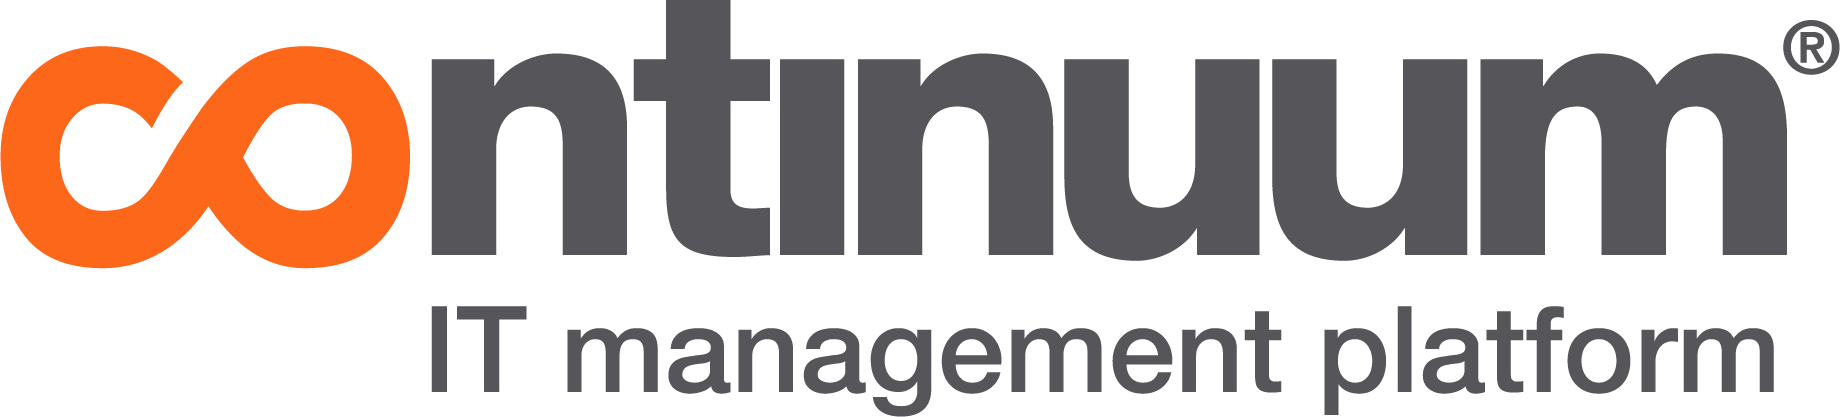 Continuum IT Management Platform Logo